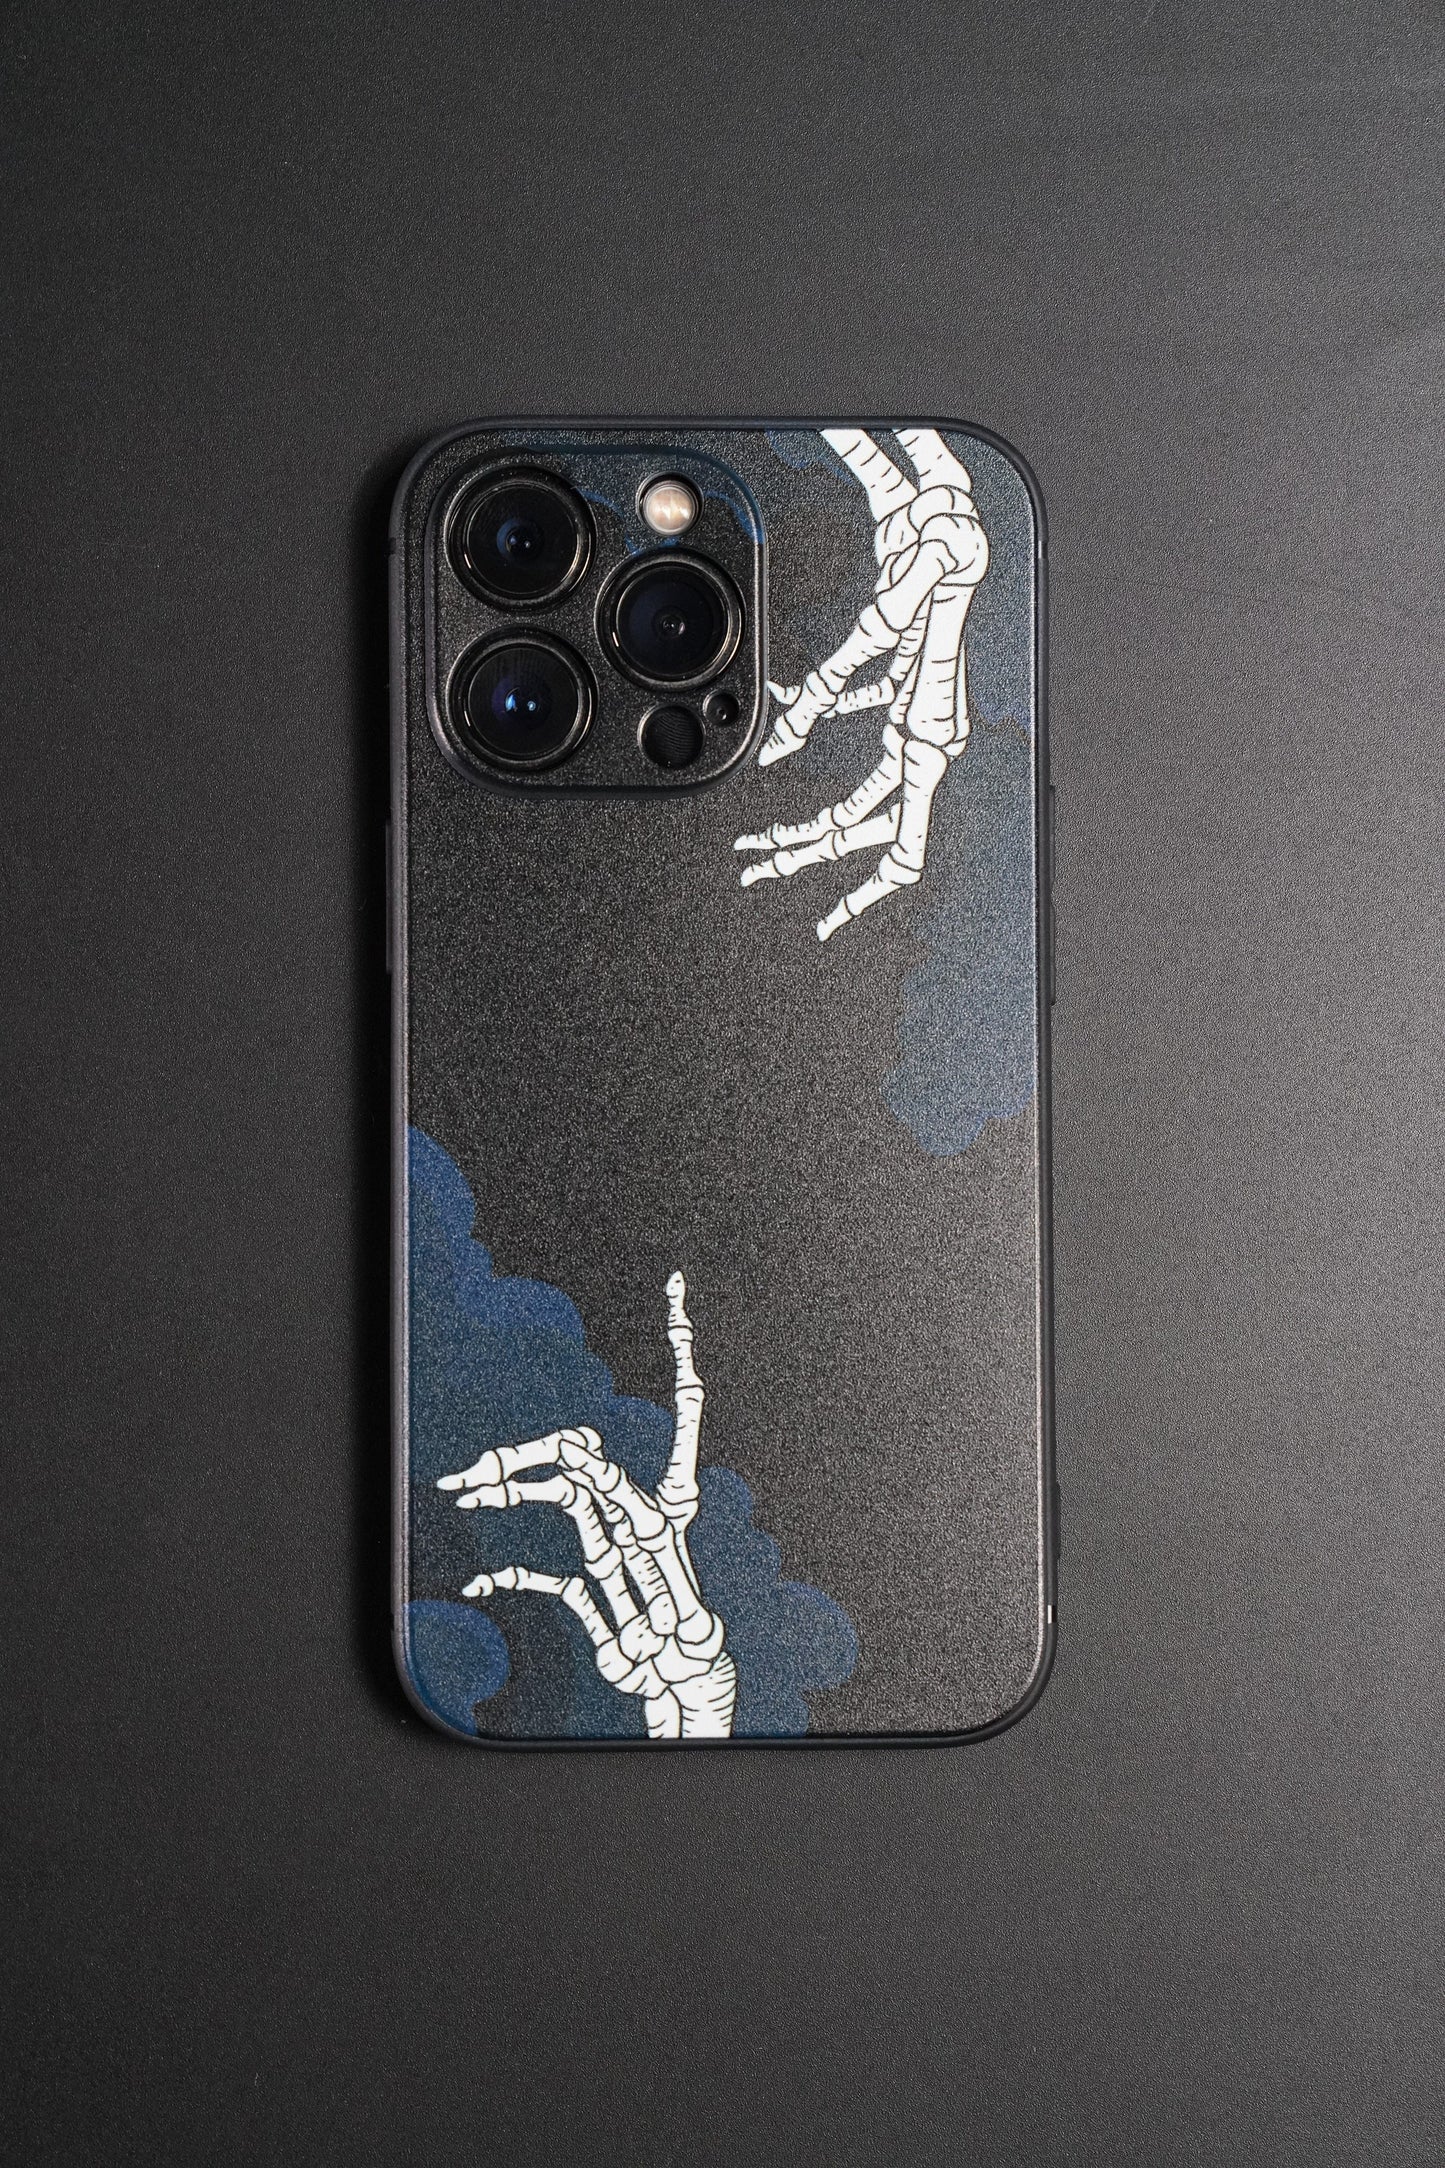 Skeleton Hand phone case